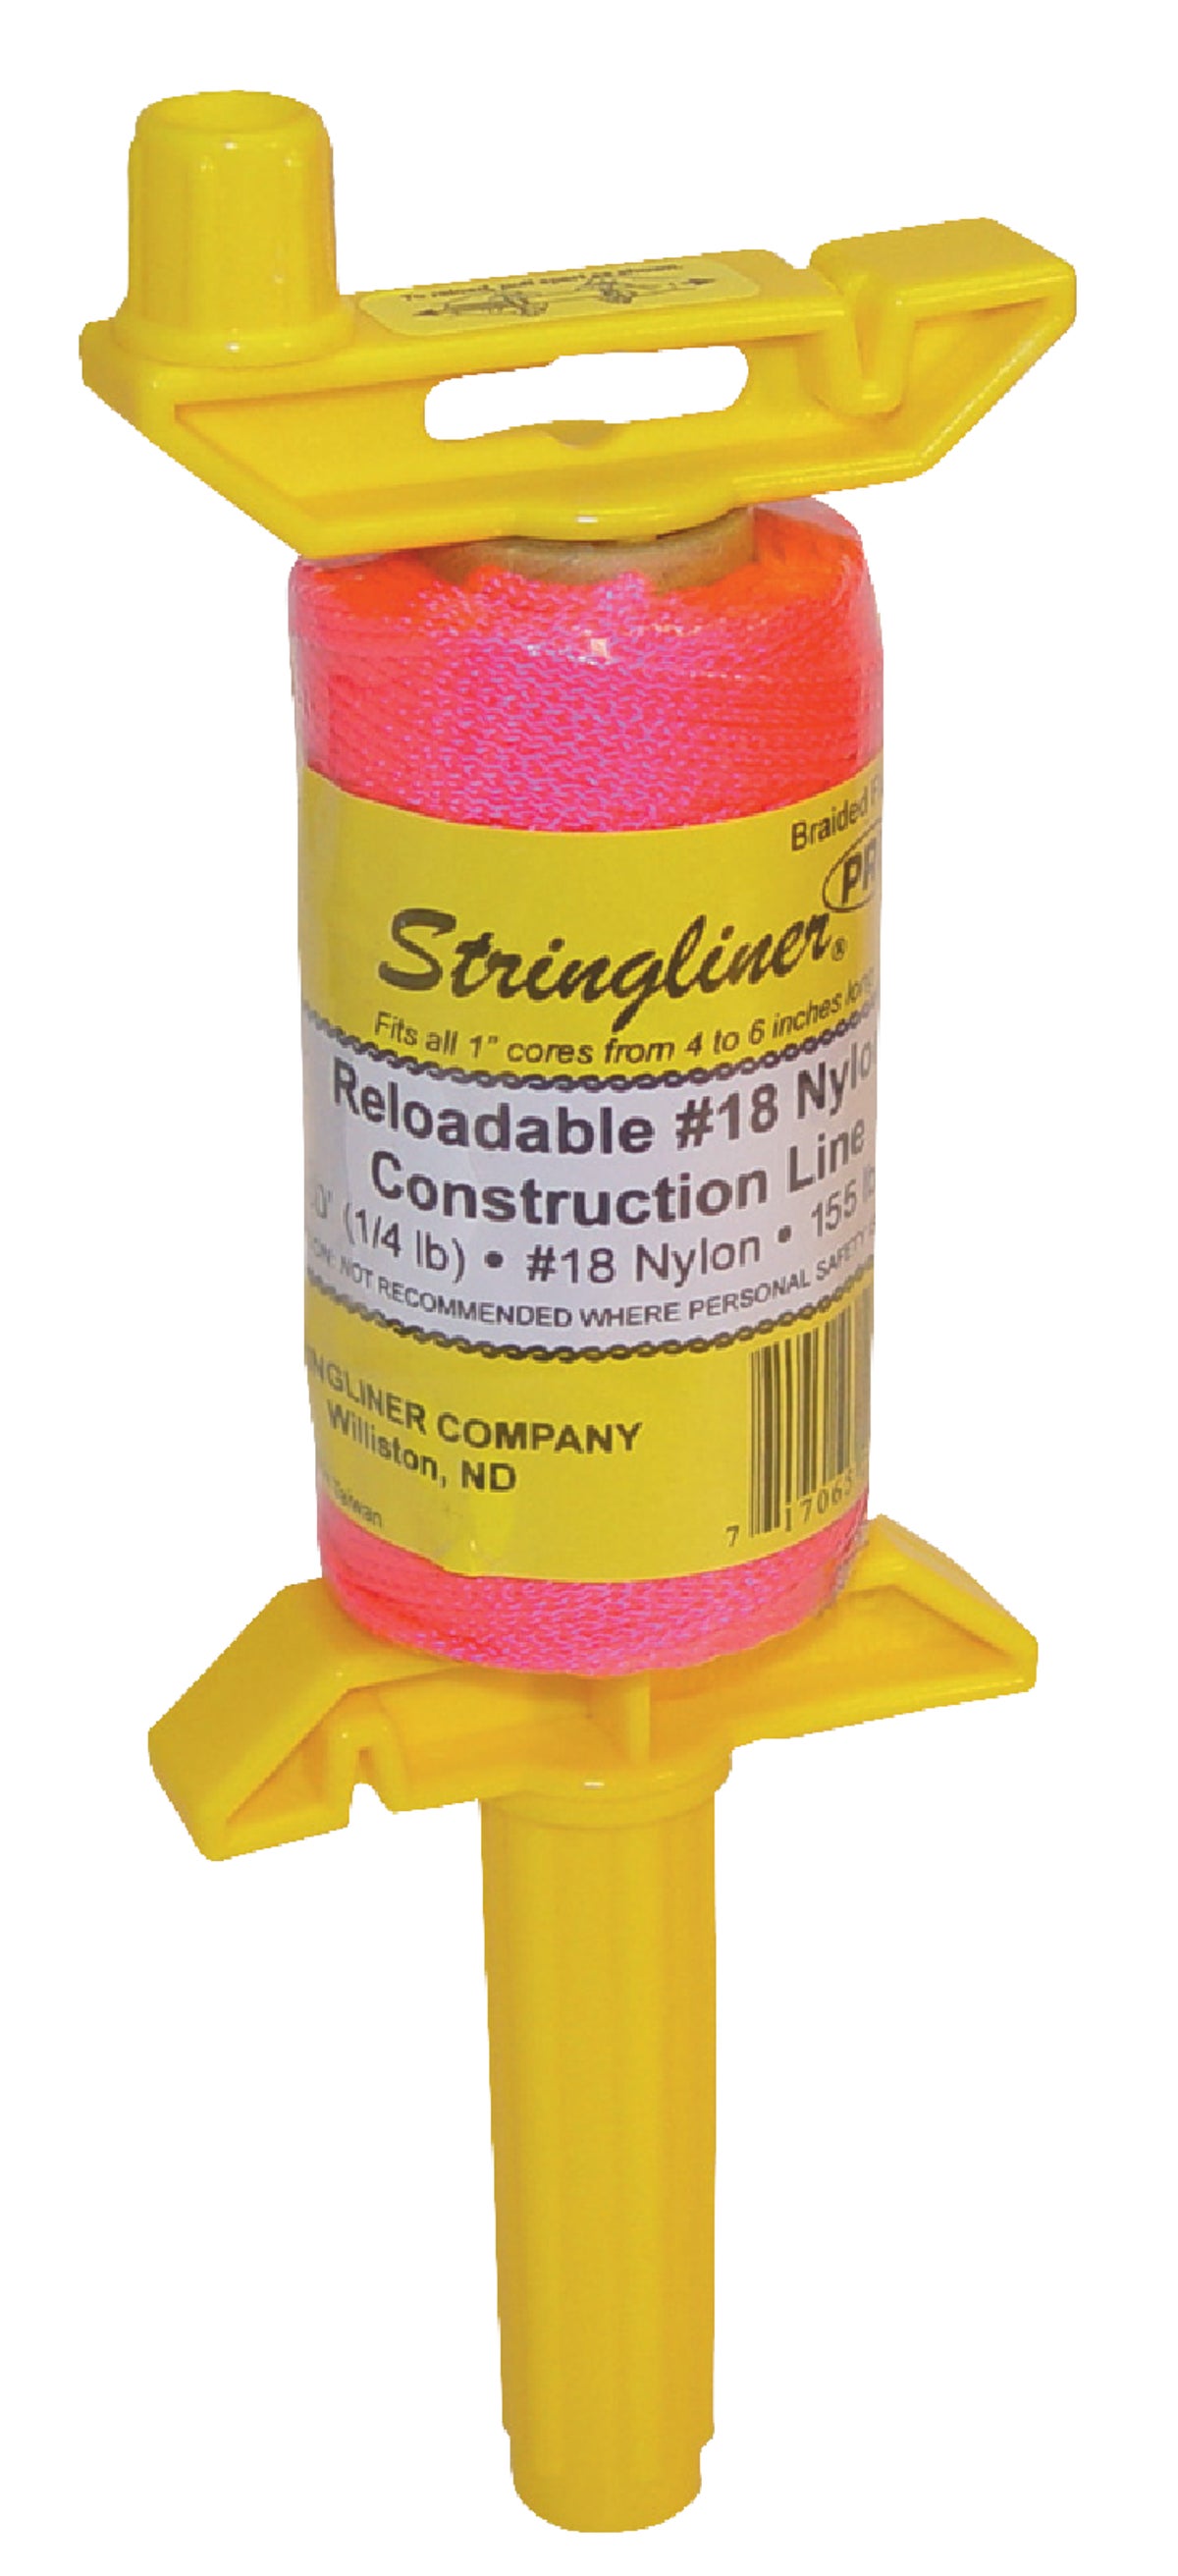 Stringliner LevelWiz Mason Line Reel Fluorescent Pink